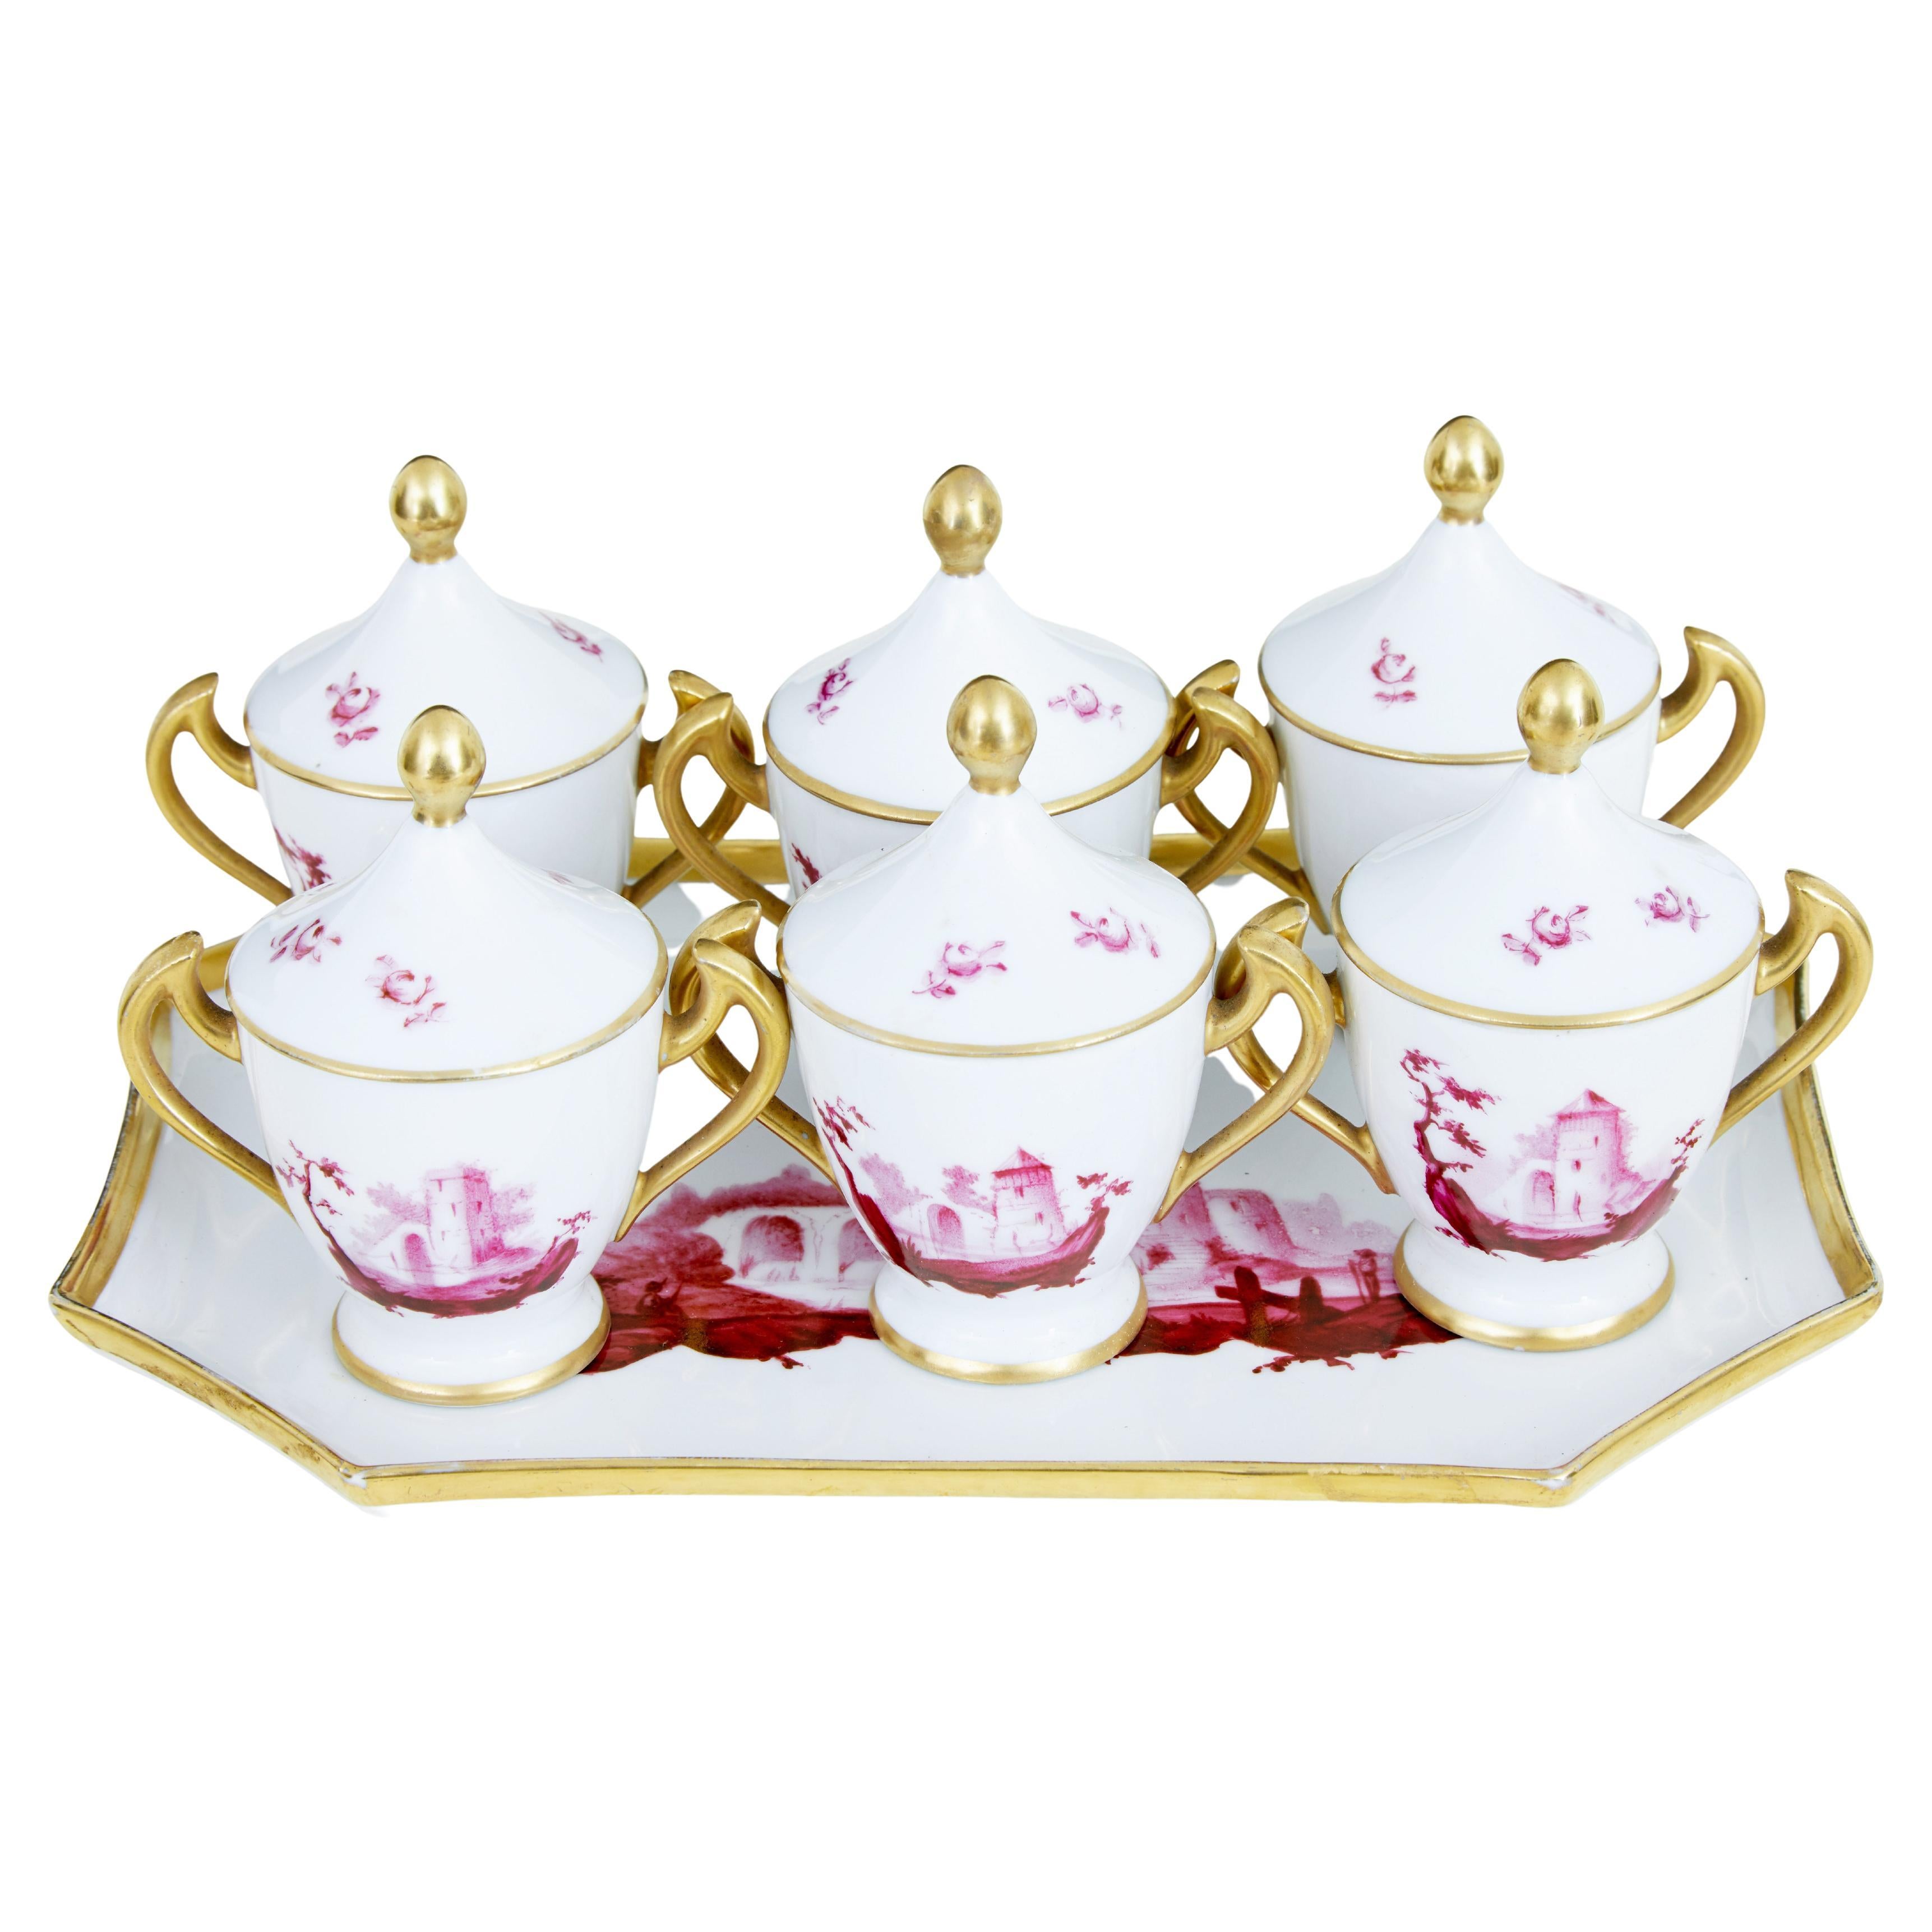 20th Century French Porcelain 7 Piece Dessert Set